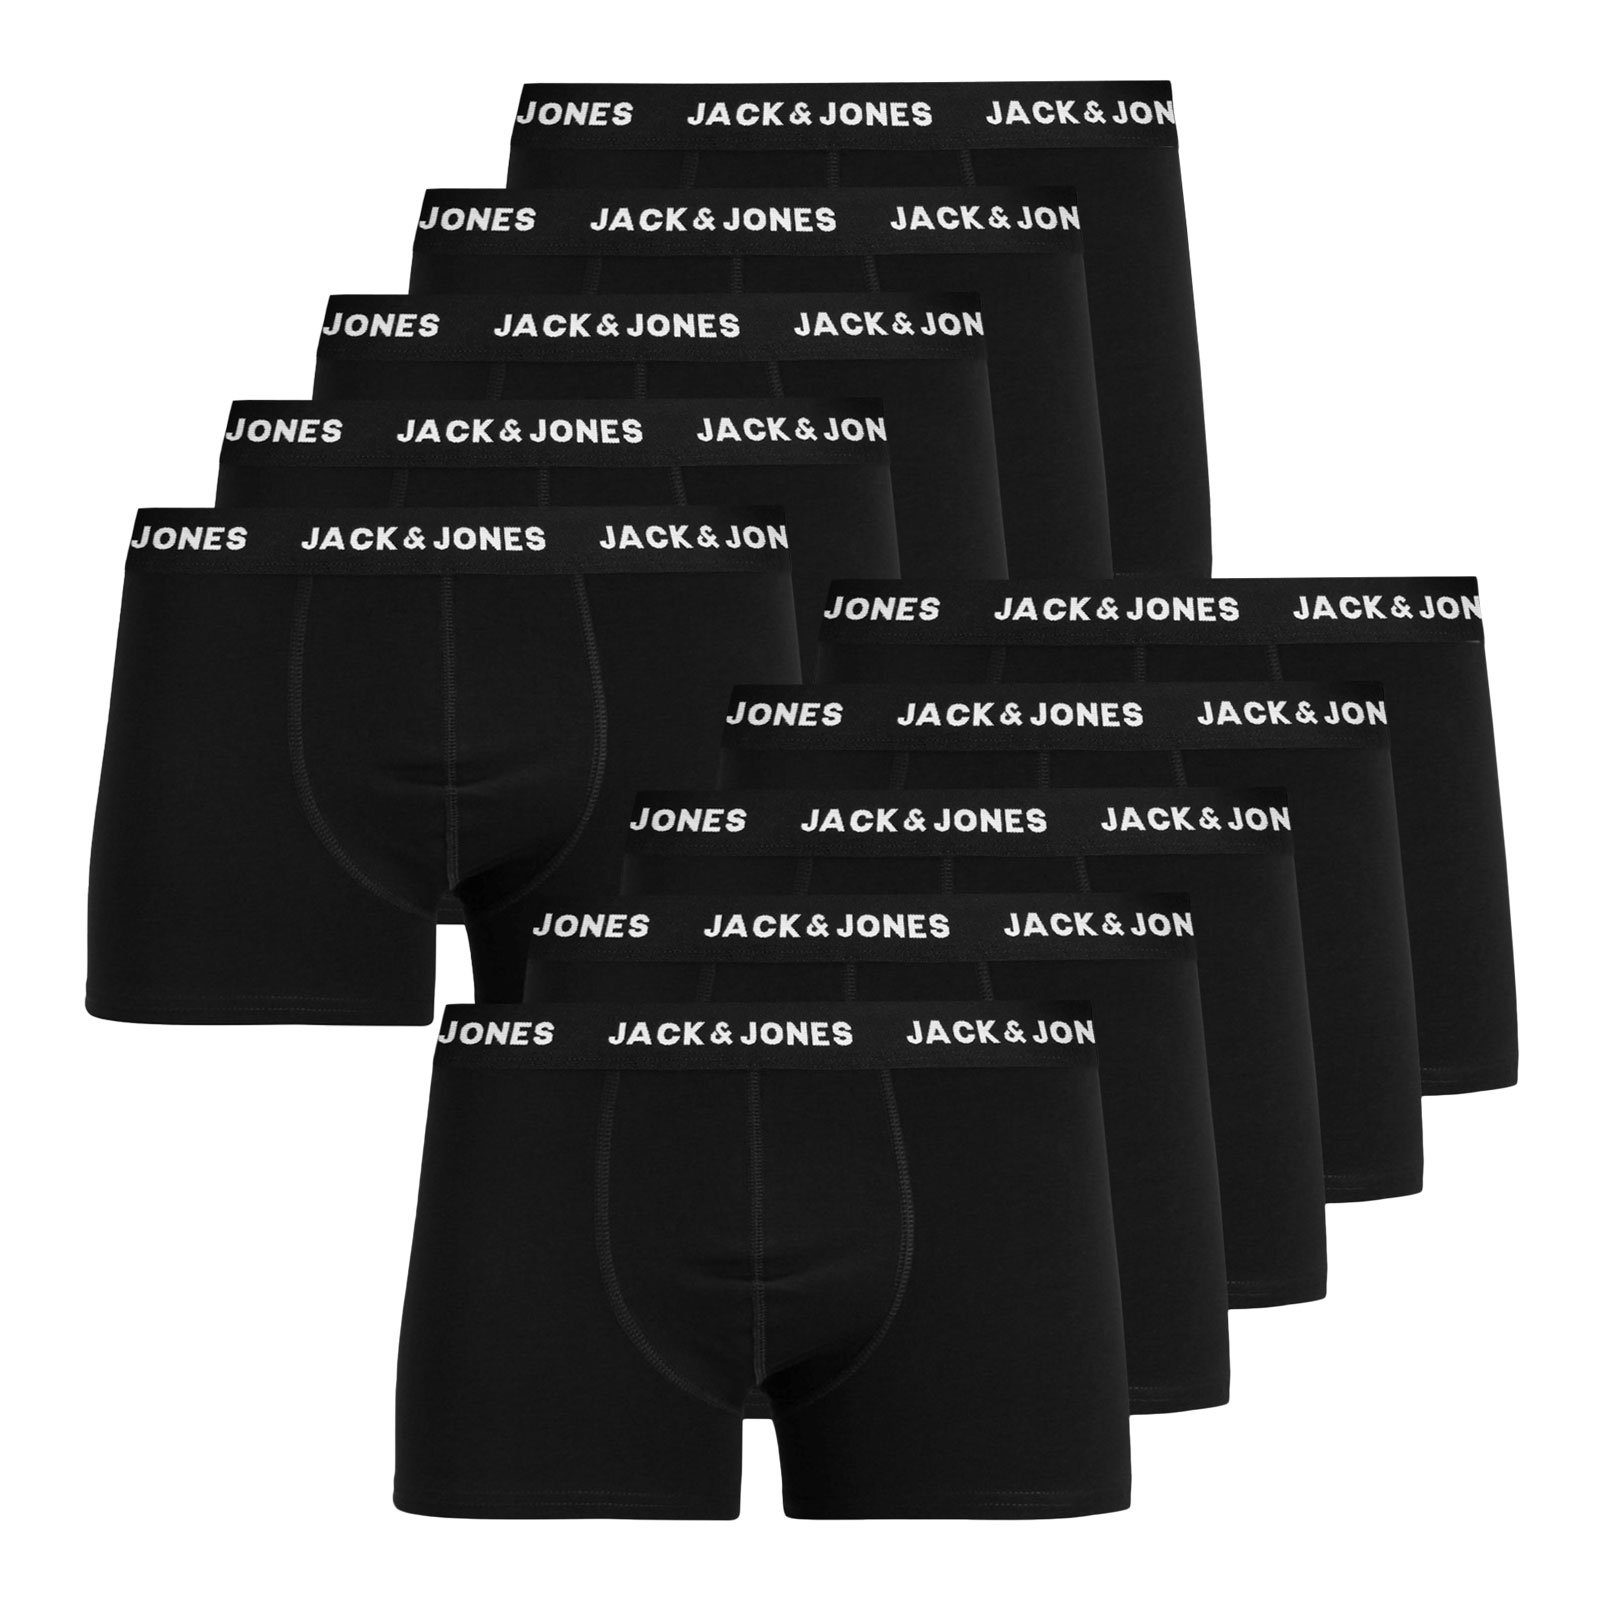 Jack & Jones Trunk 10er Pack JACK & JONES Trunks (10-St) mit umlaufendem Markenschriftzug am Bund